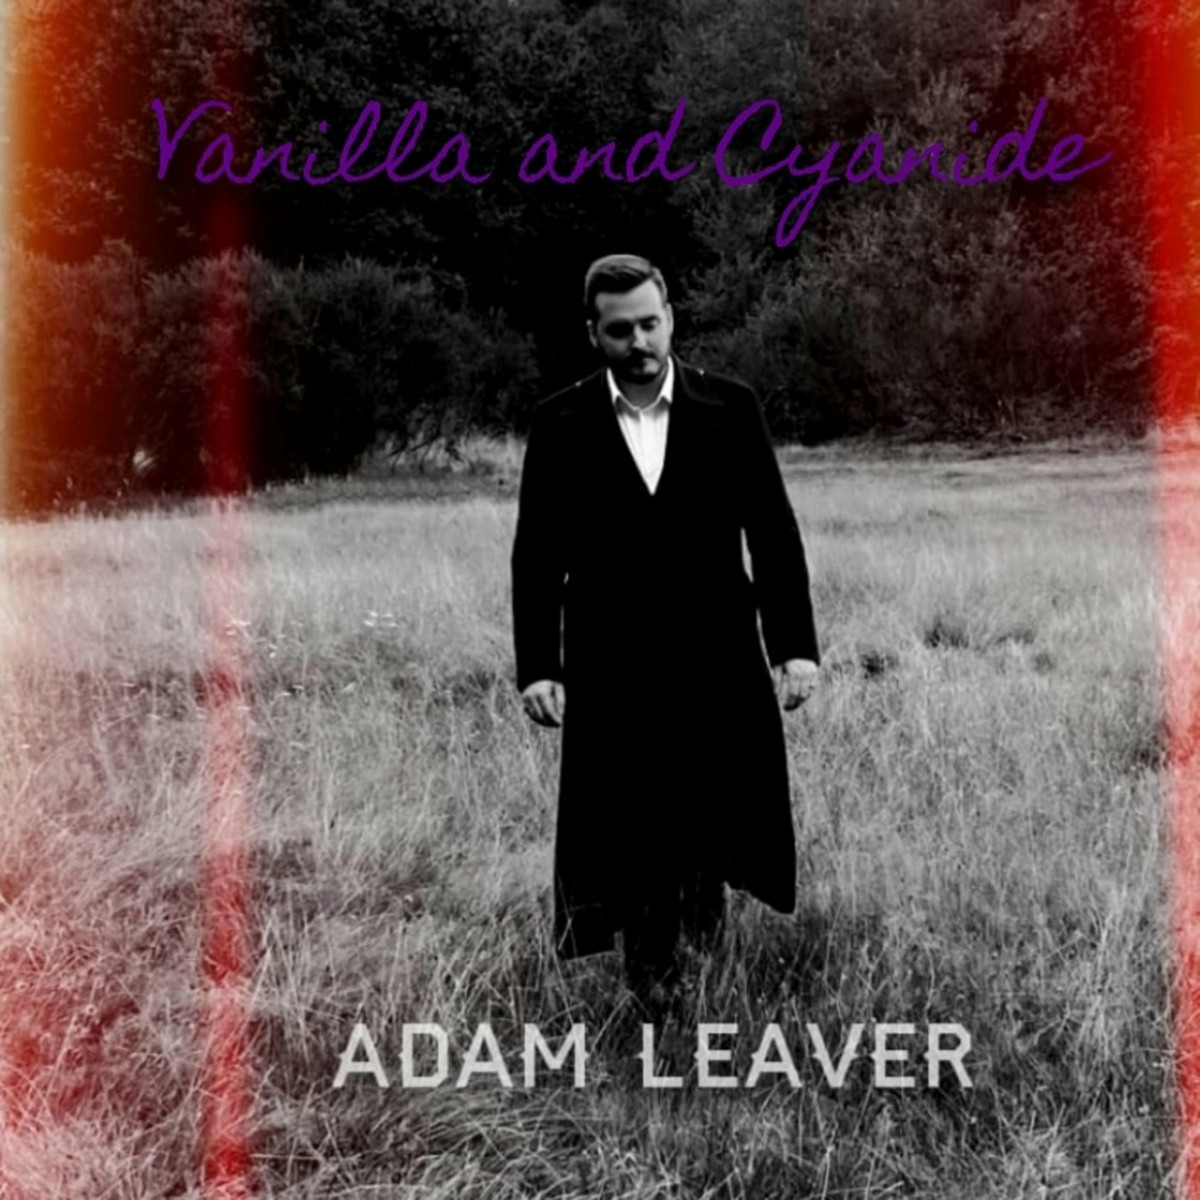 Adam Leaver - Vanilla And Cyanide